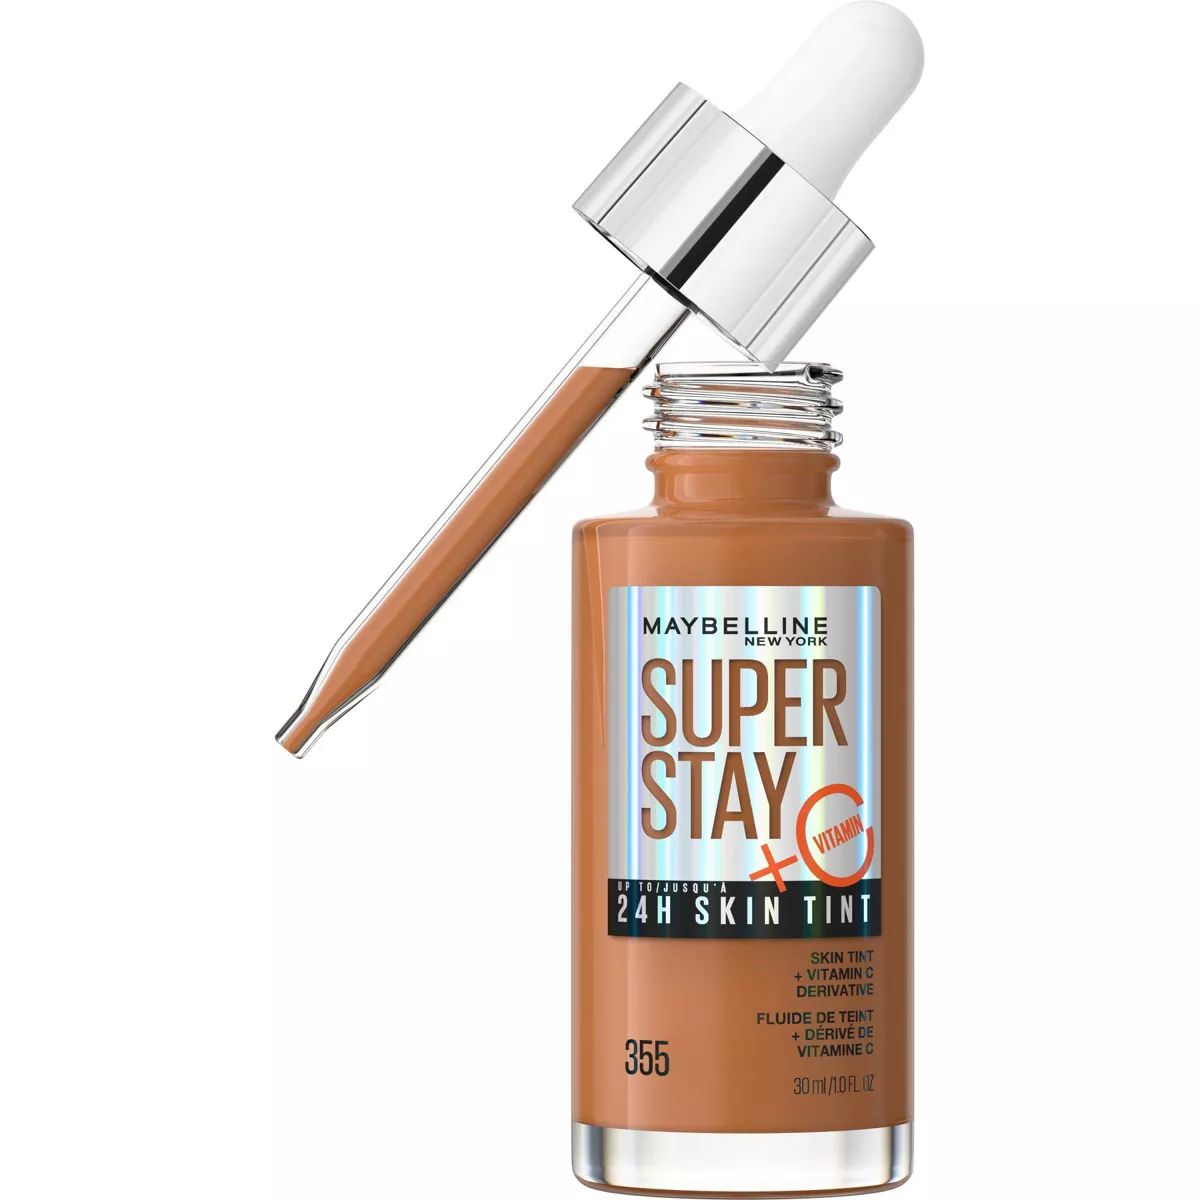 Maybelline Super Stay 24HR Skin Tint Foundation Serum with Vitamin C - 338 - 1 fl oz | Target